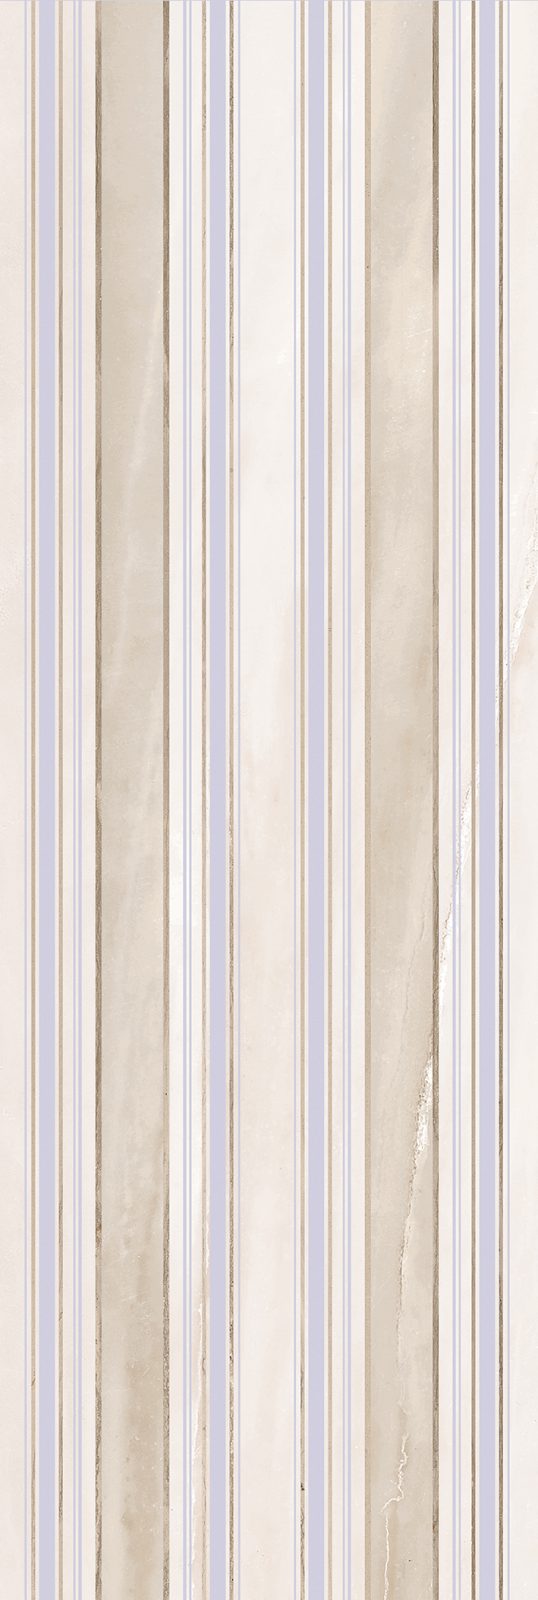 Tender Marble Декор полоски голубой 1064-0042 20×60